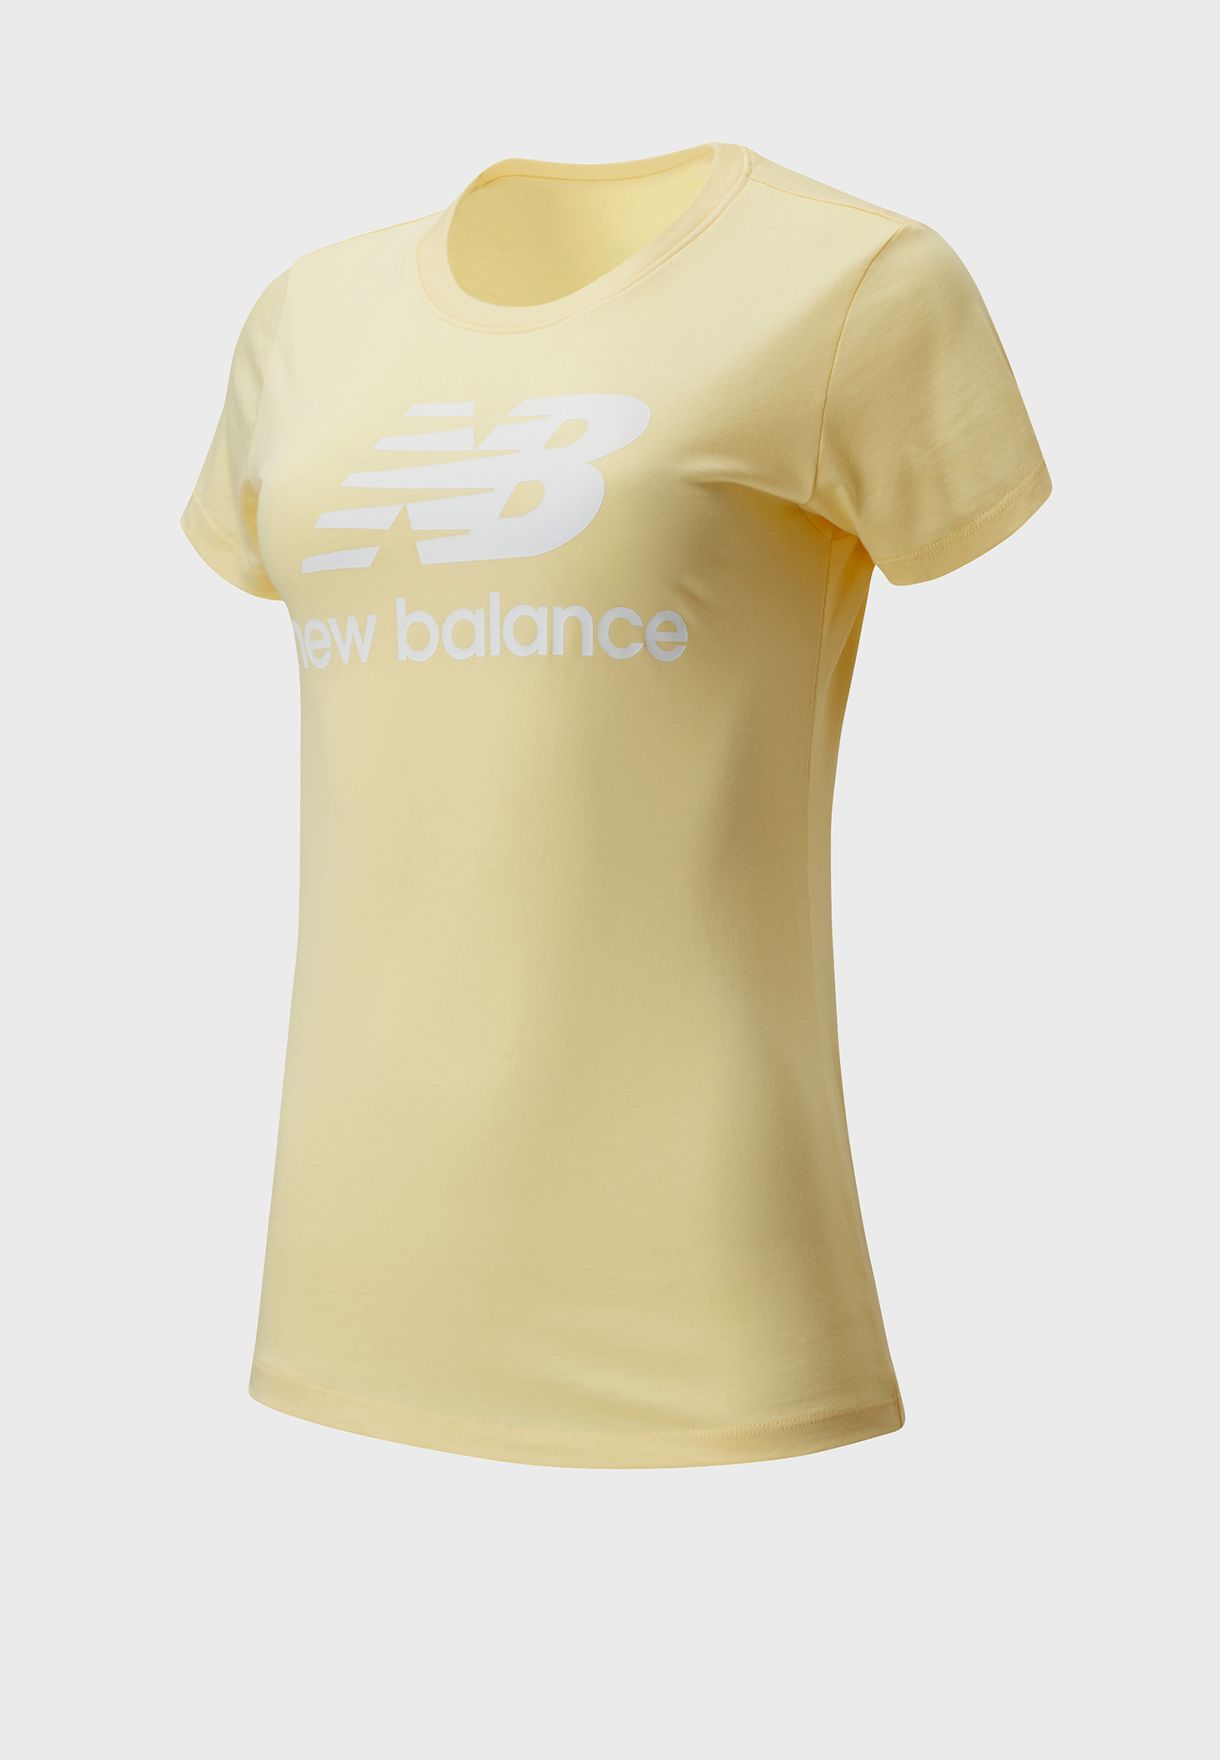 new balance yellow shirt